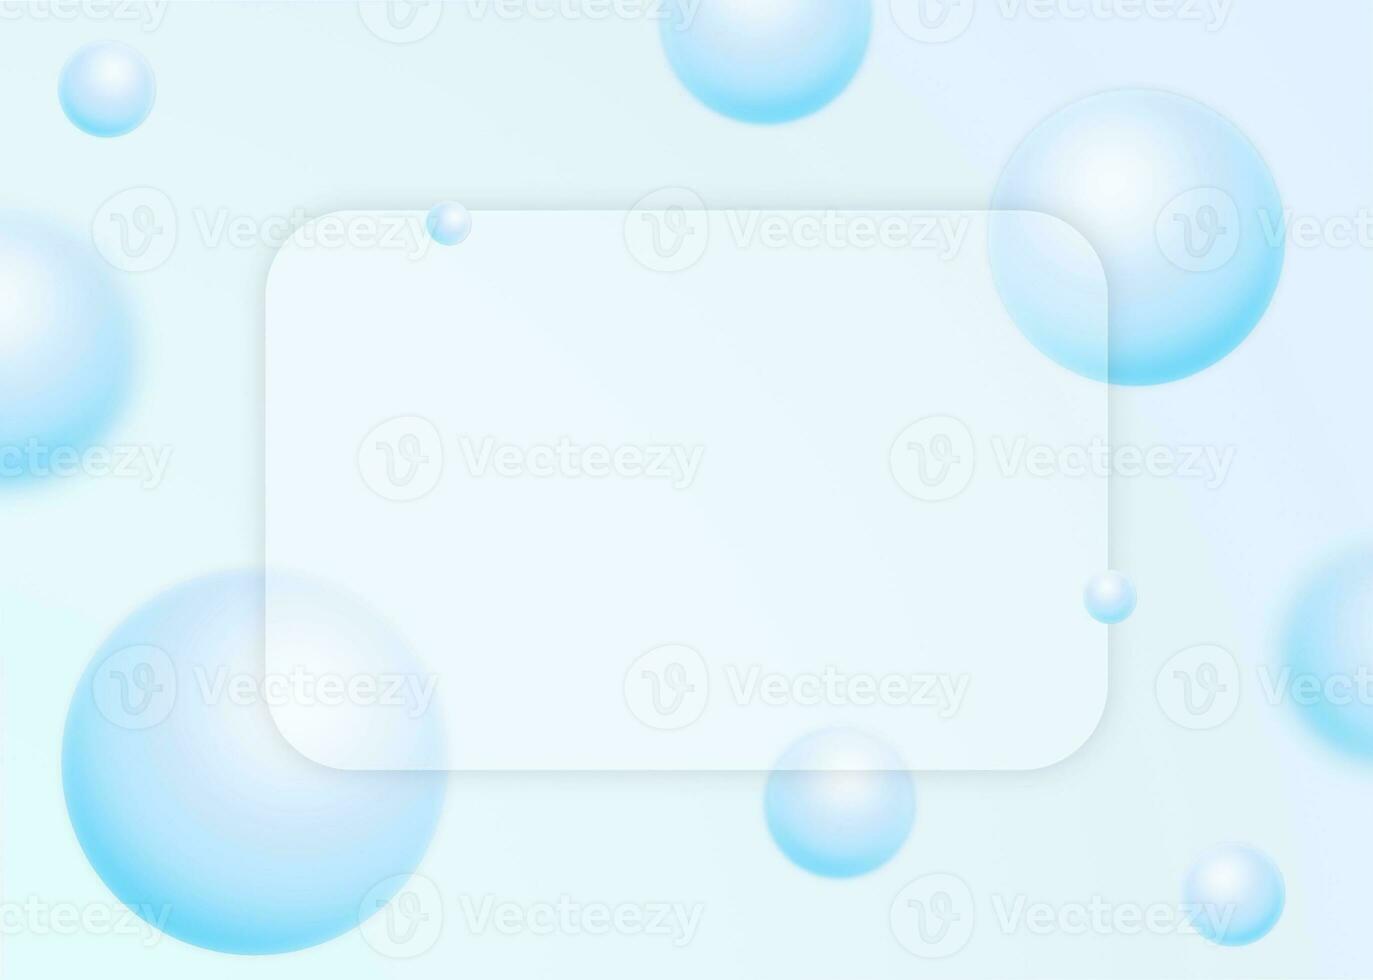 céu azul vidro morfismo e esfera pastel cores o negócio abstrato fundo foto